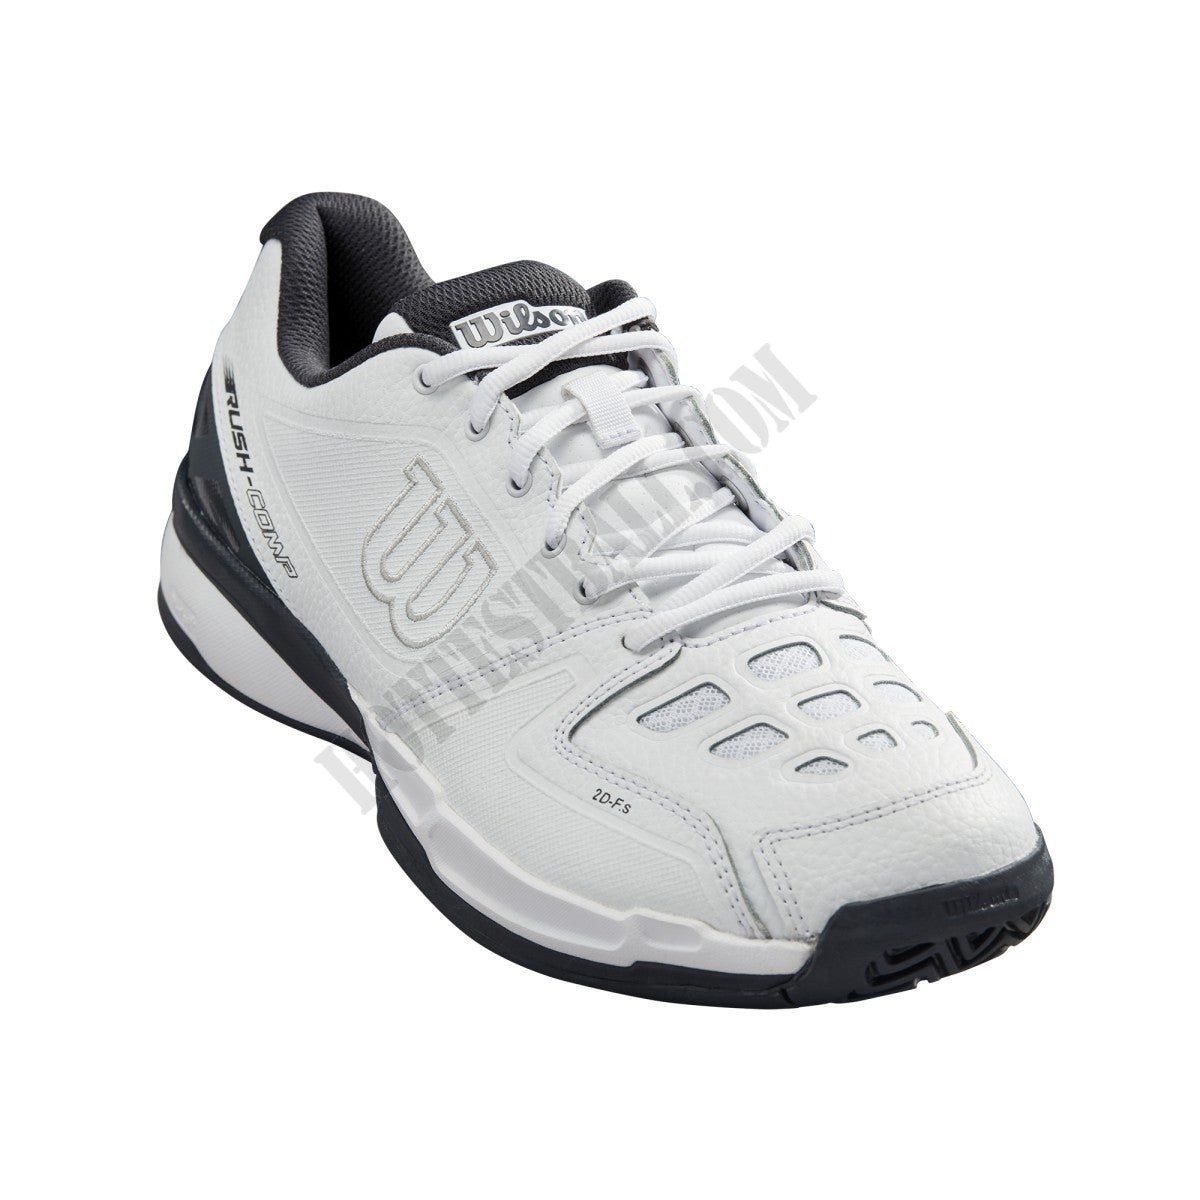 Rush Comp LTR Tennis Shoe - Wilson Discount Store - Rush Comp LTR Tennis Shoe - Wilson Discount Store